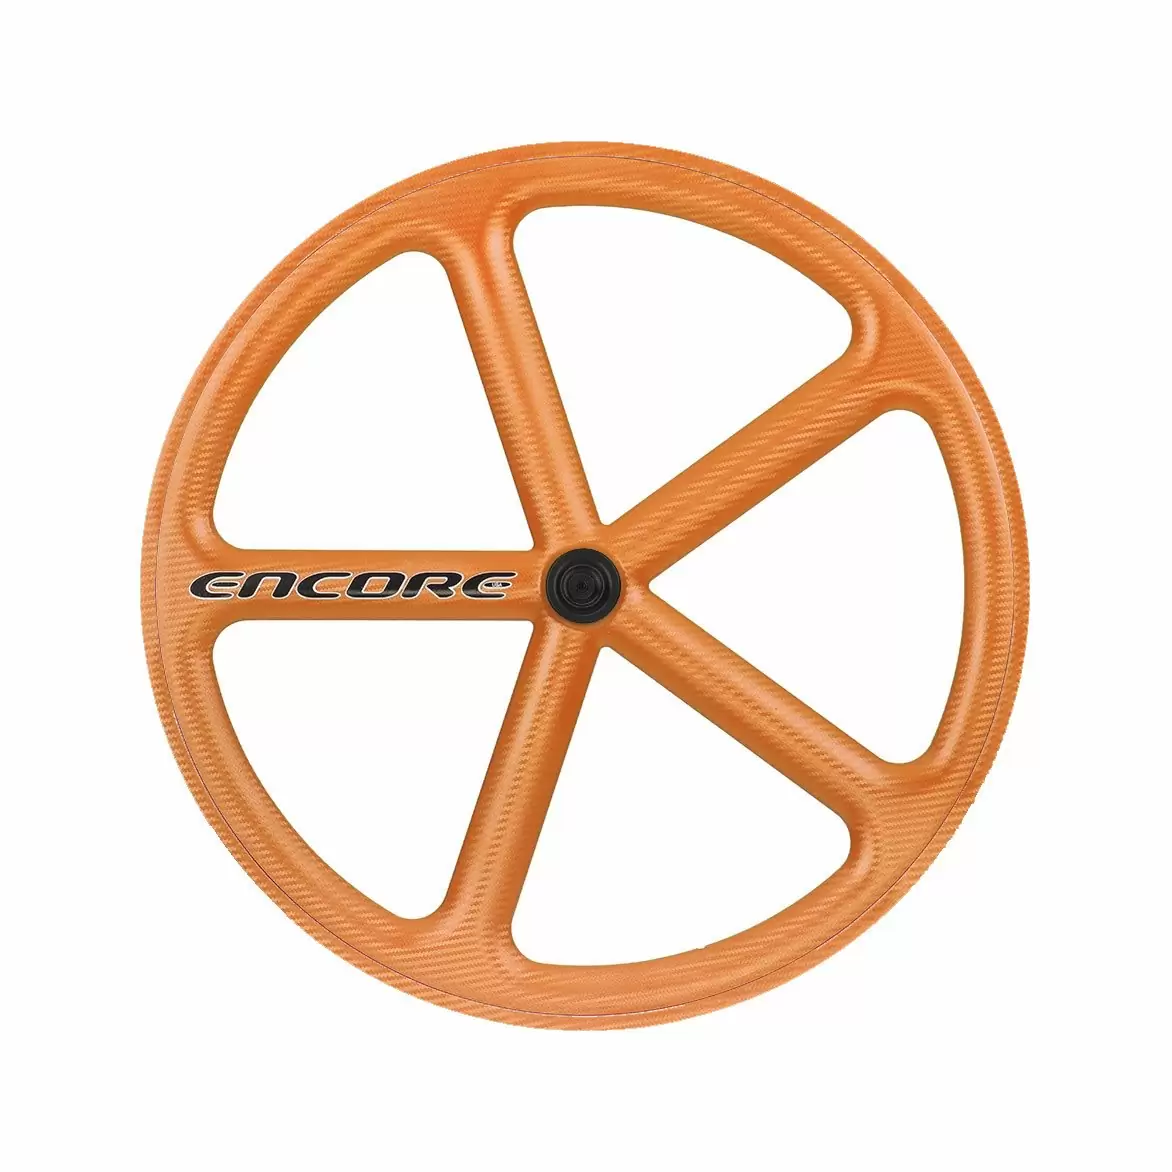 roue arrière 700c piste 5 rayons tissage carbone orange nmsw - image